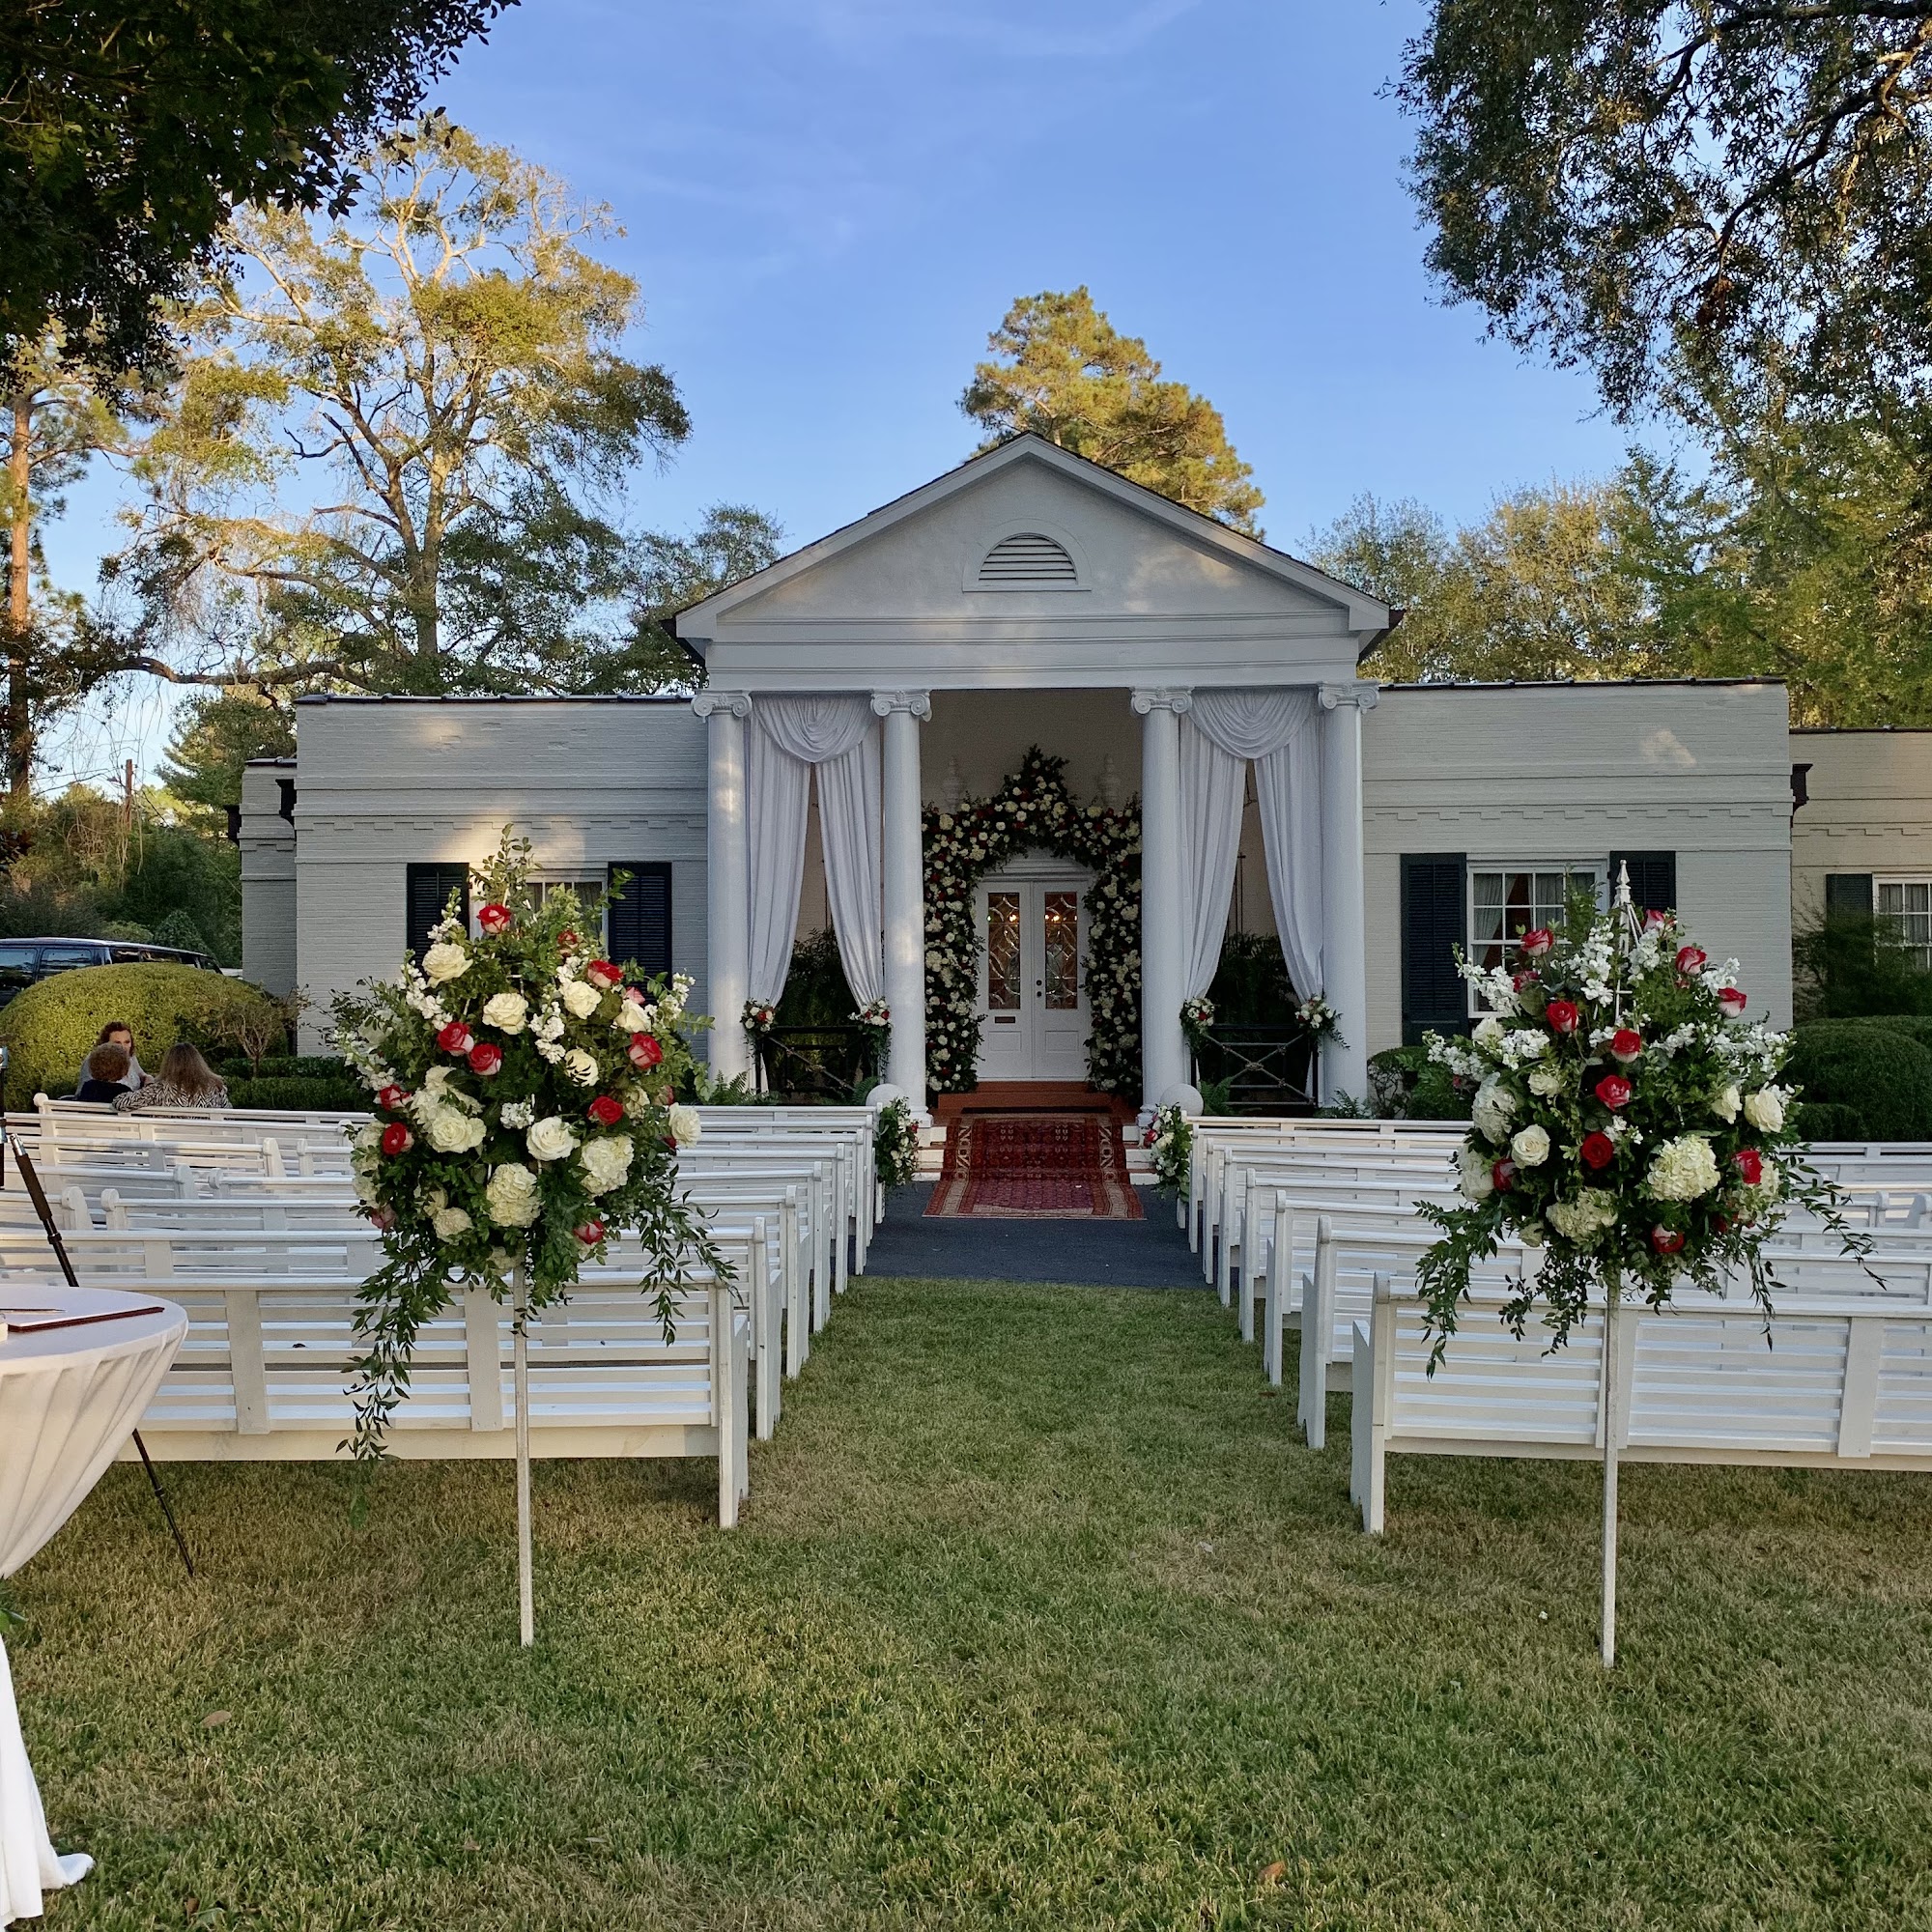 Southern Traditions Wedding & Events Rentals 576 Johnnie Ingram Rd, Webb Alabama 36376